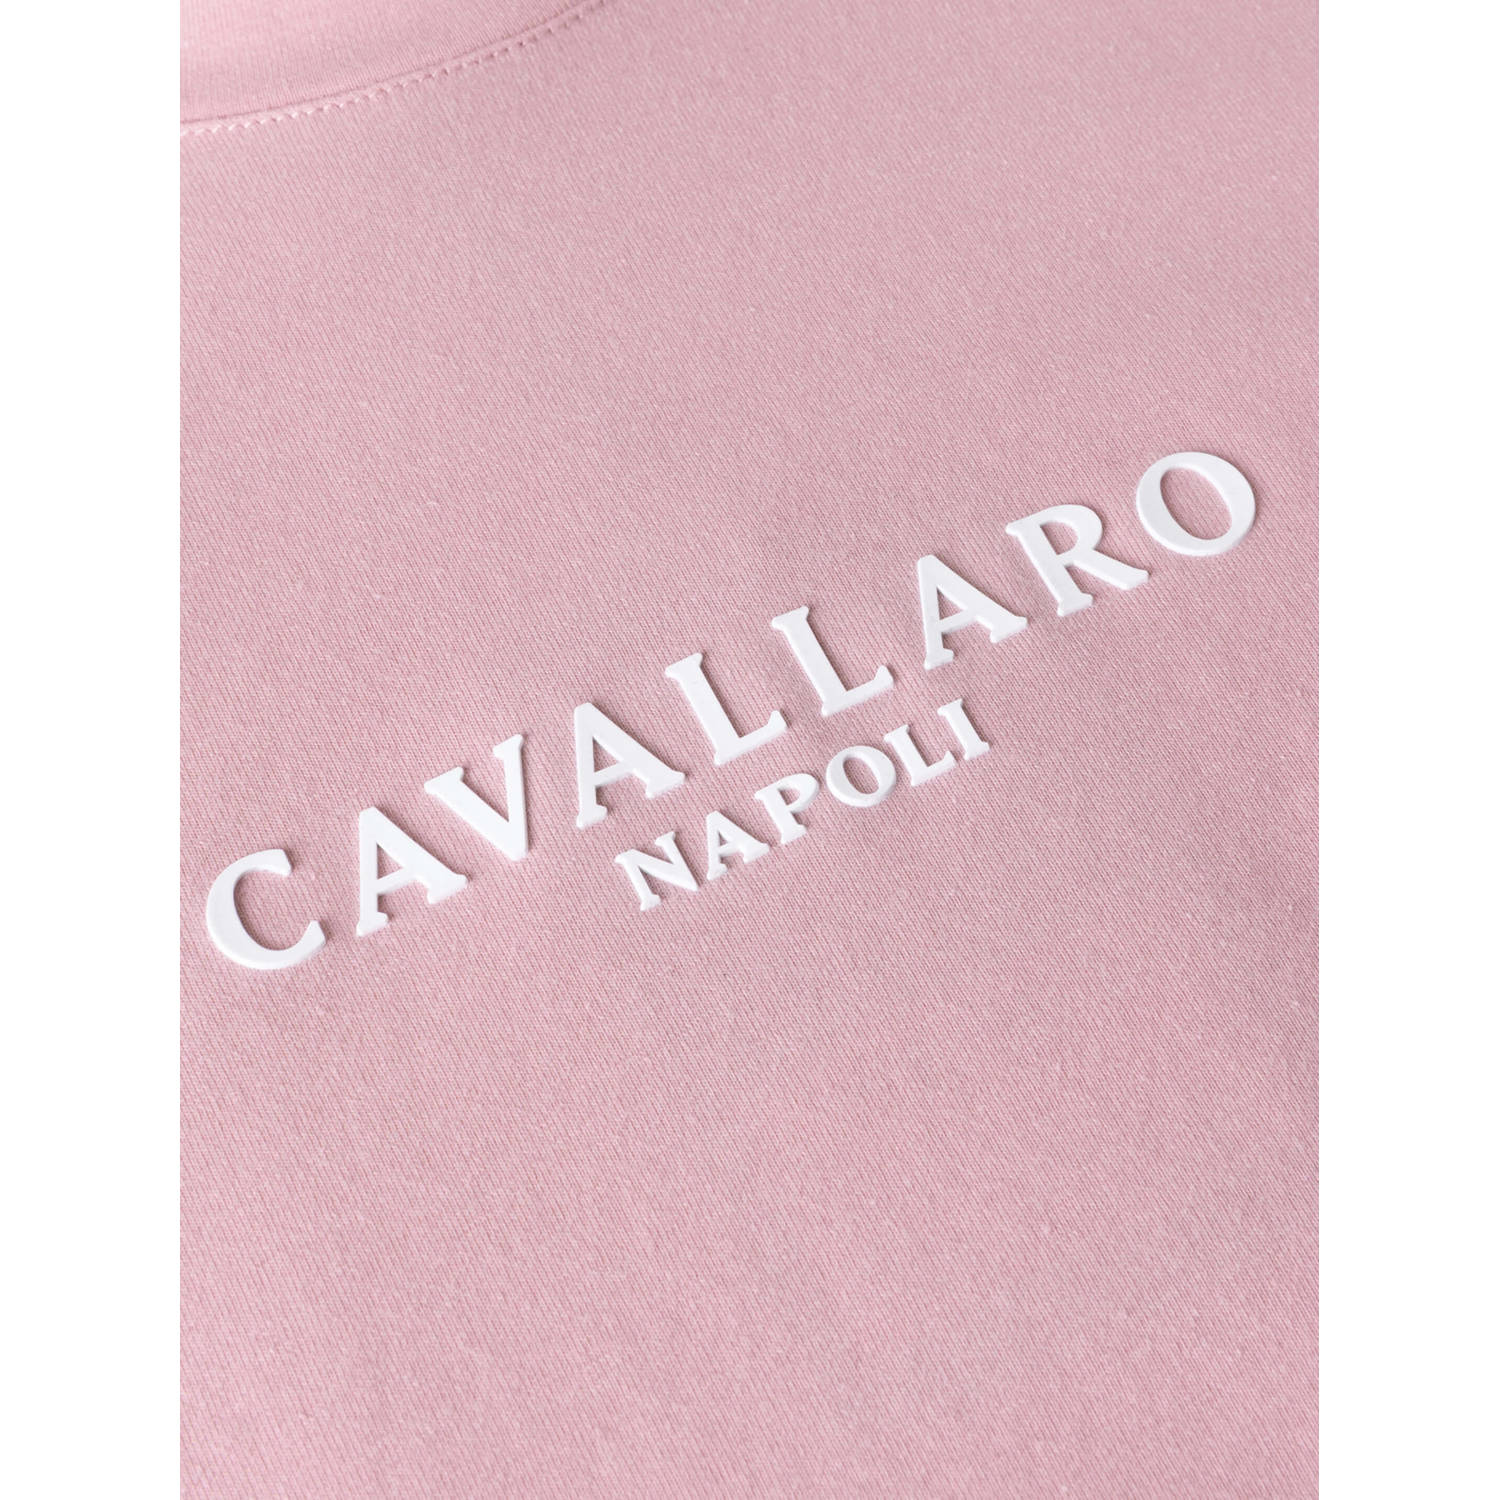 Cavallaro Napoli regular fit T-shirt Mandrio met logo old pink